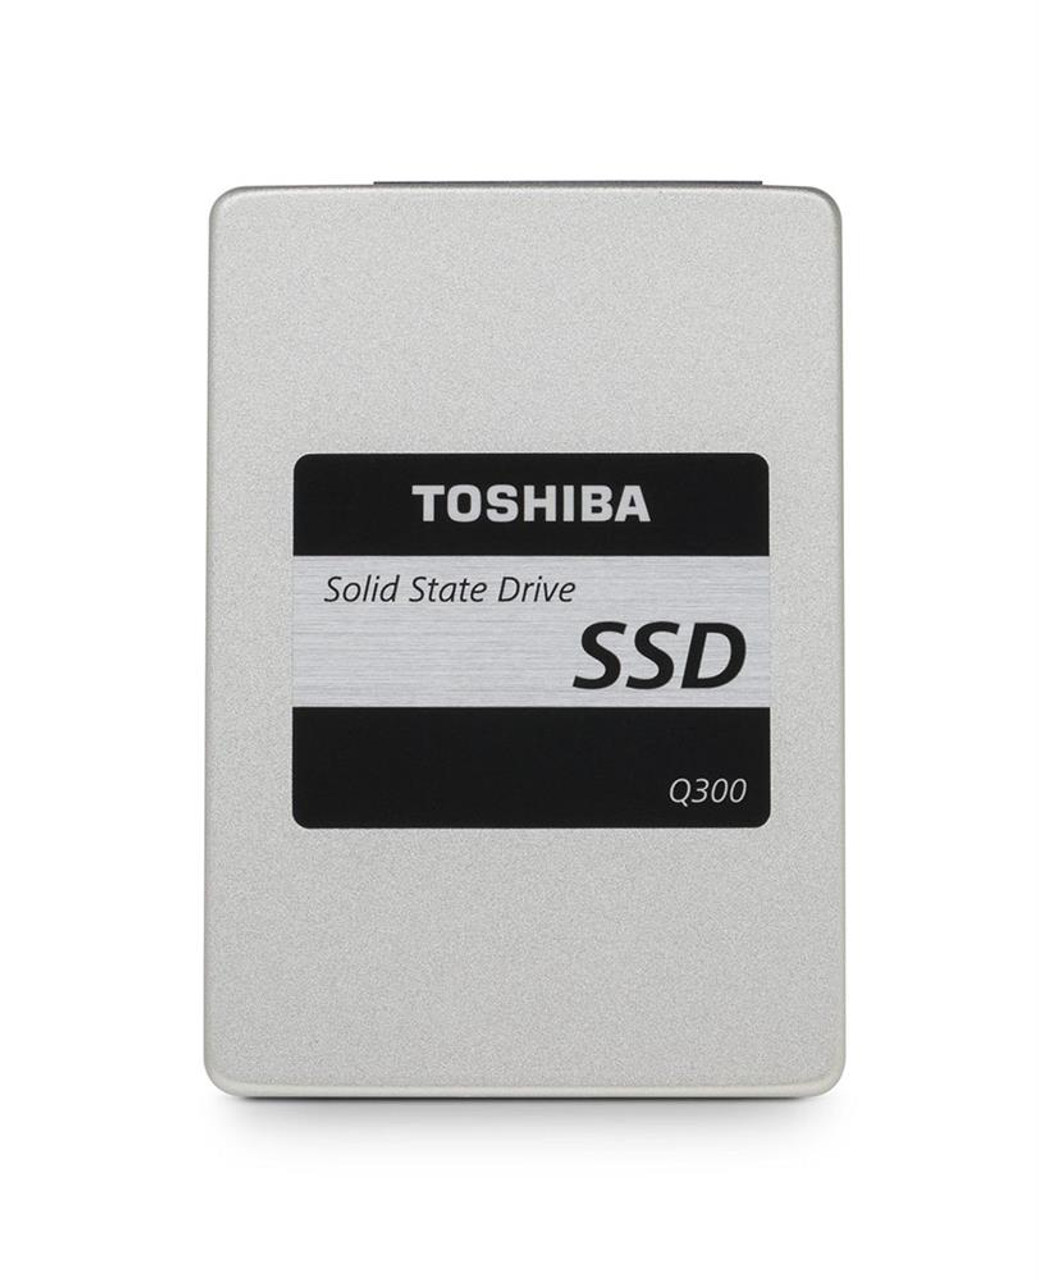 HDTS724AZSTA Toshiba Q300 240GB TLC SATA 6Gbps 2.5-inch Internal Solid State Drive (SSD)